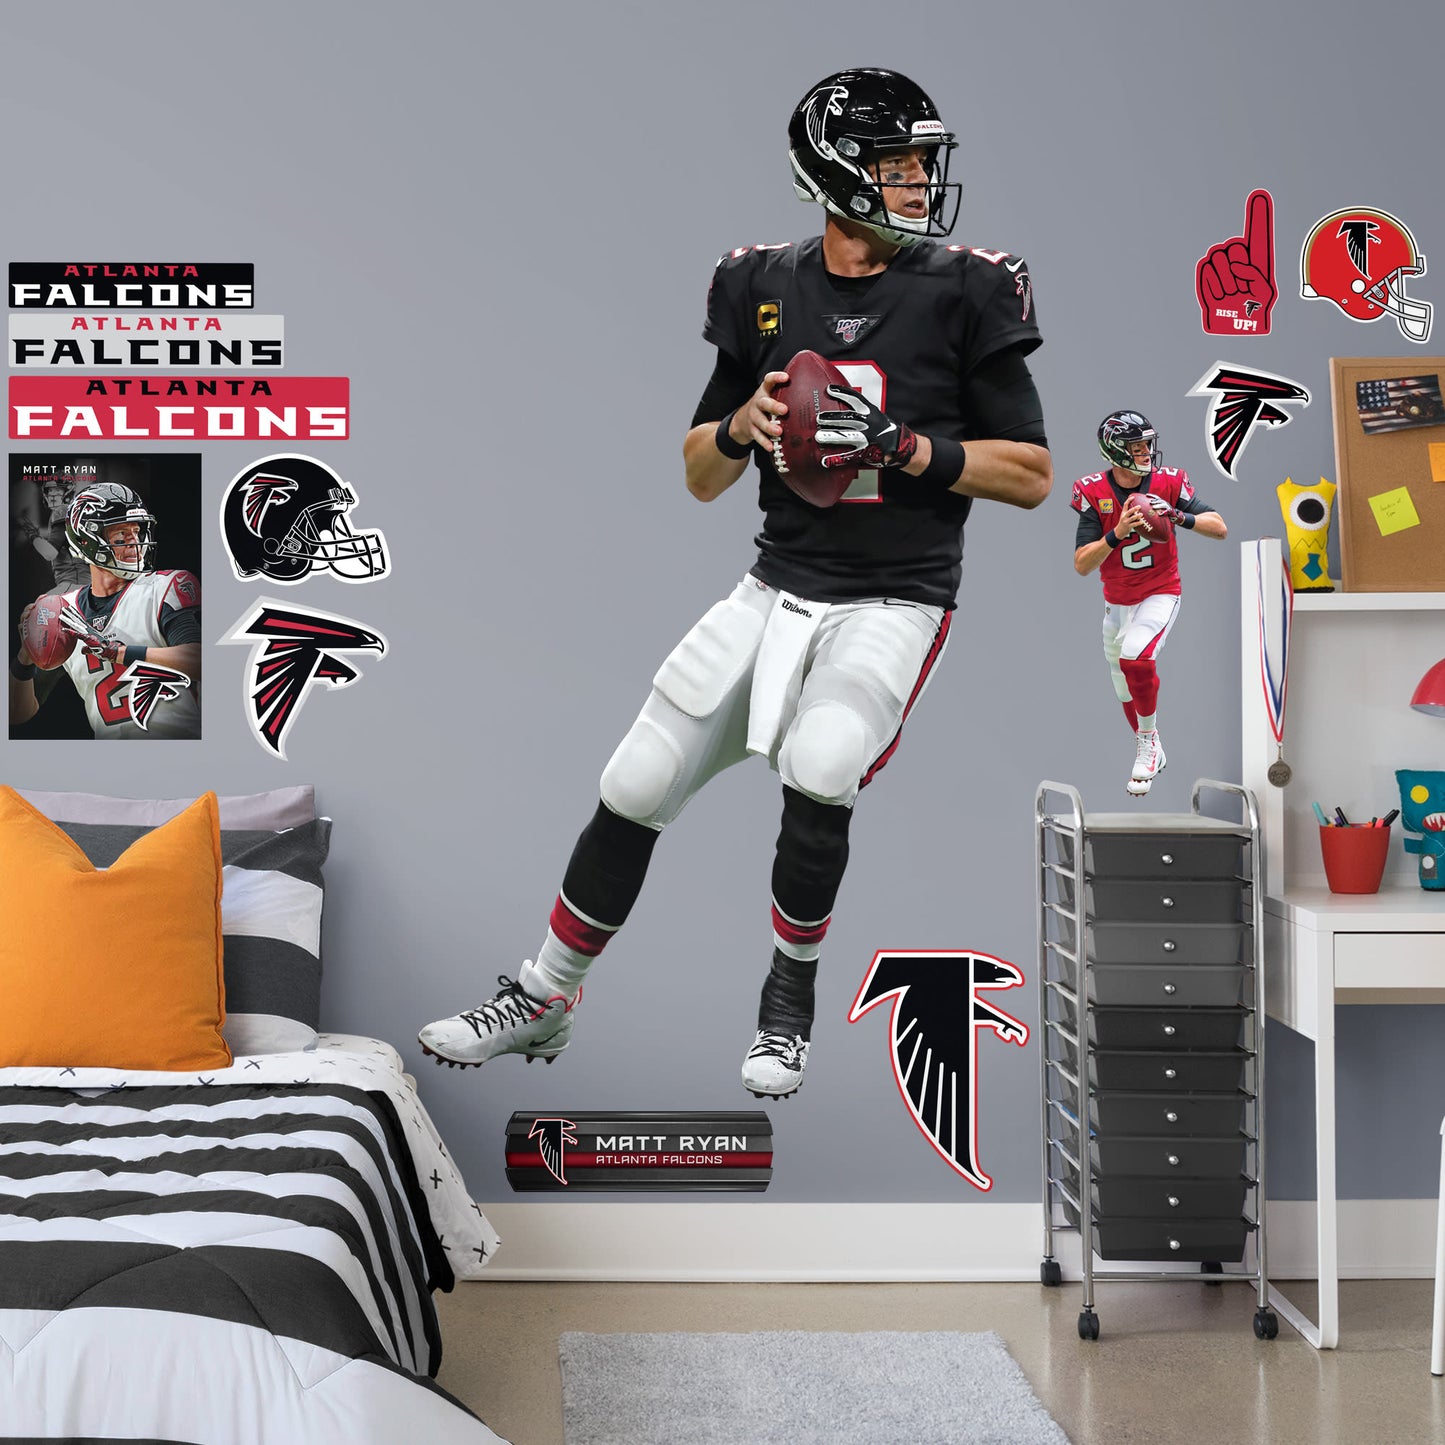 Atlanta Falcons: Matt Ryan Throwback        - Officially Licensed NFL Removable Wall   Adhesive Decal